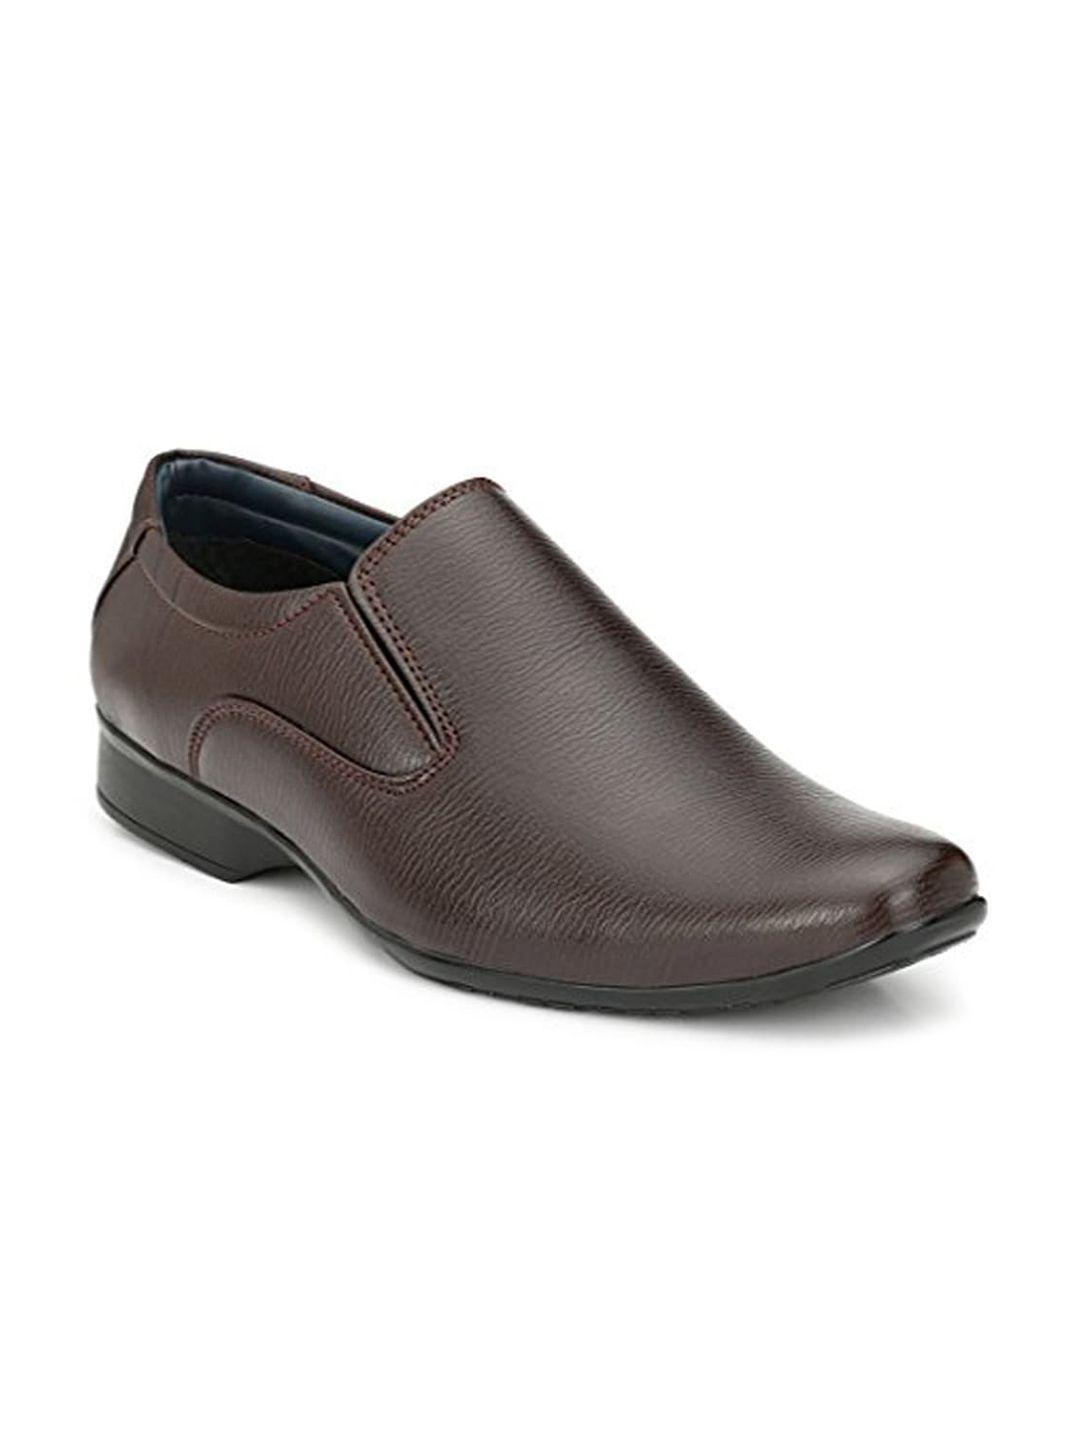 birgos men brown solid formal leather slip on shoes